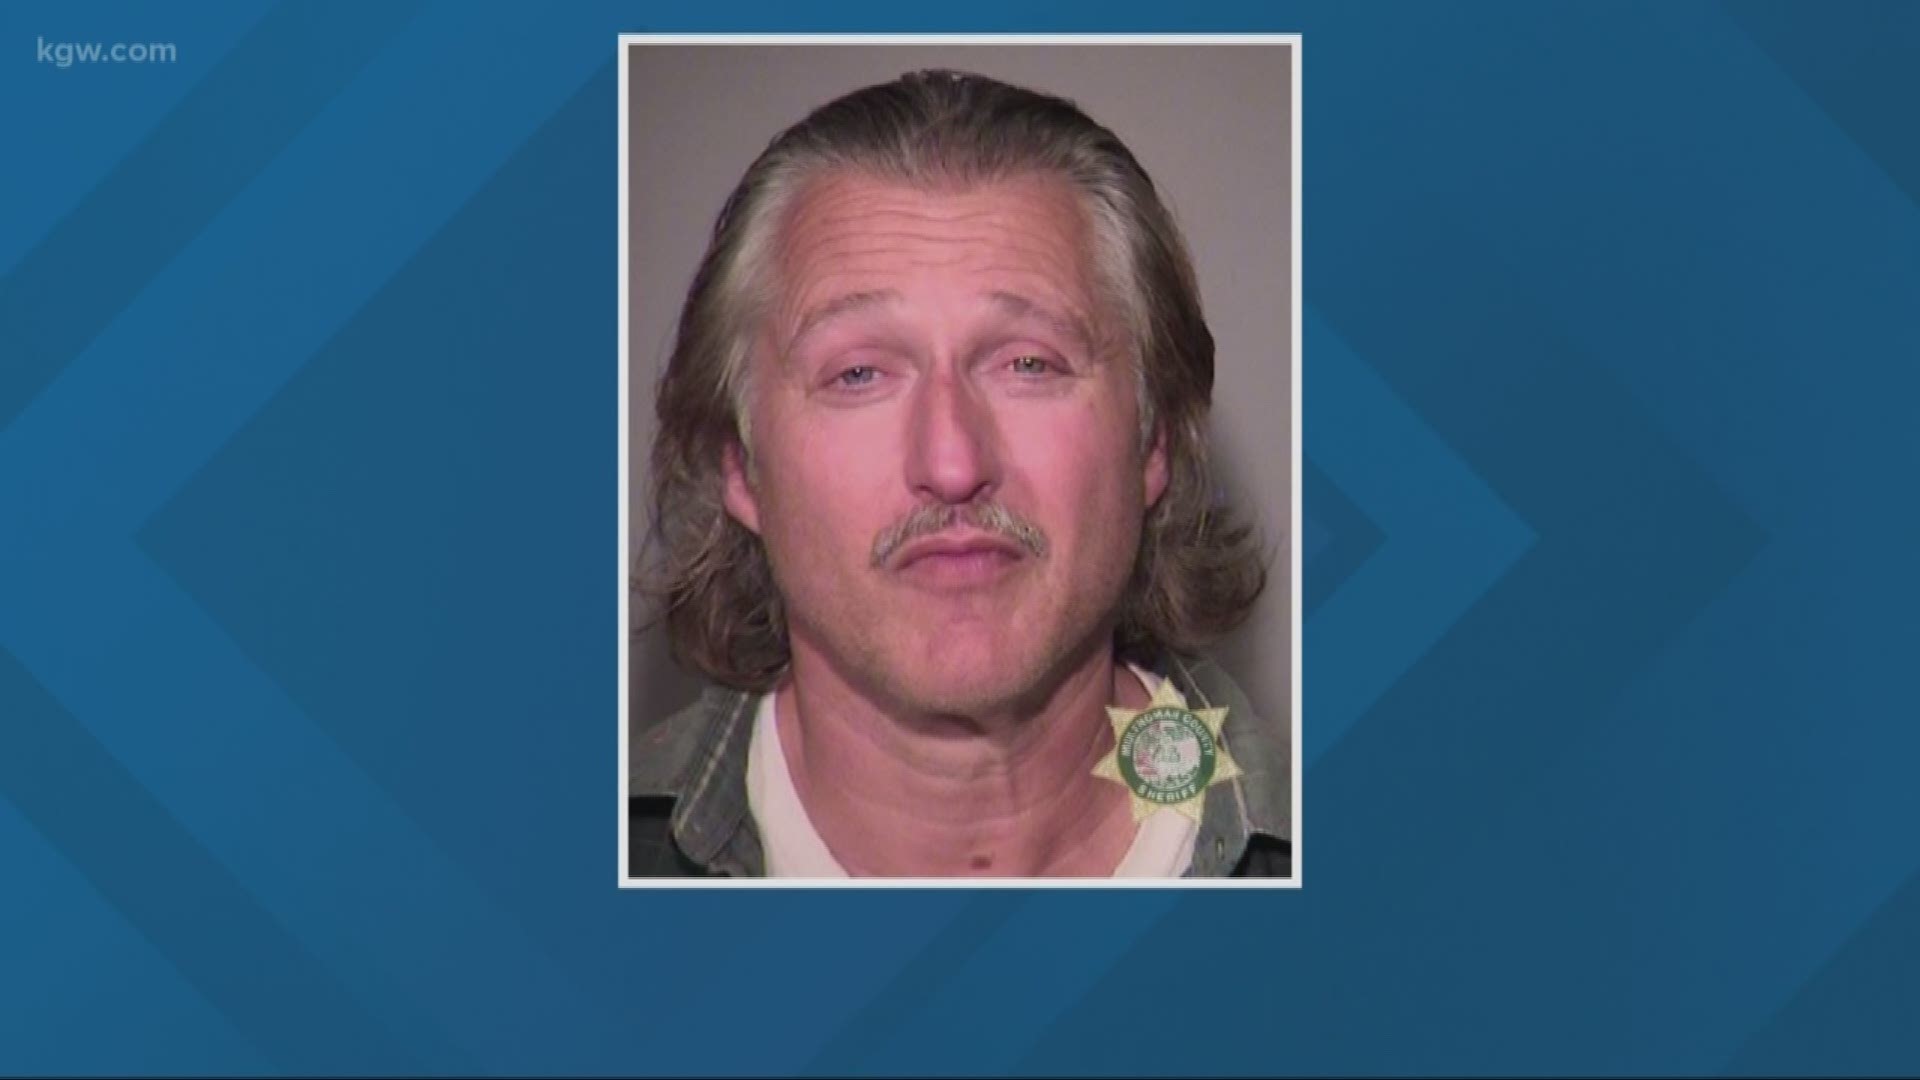 The man accused of shooting two Washington County deputies has been identified.